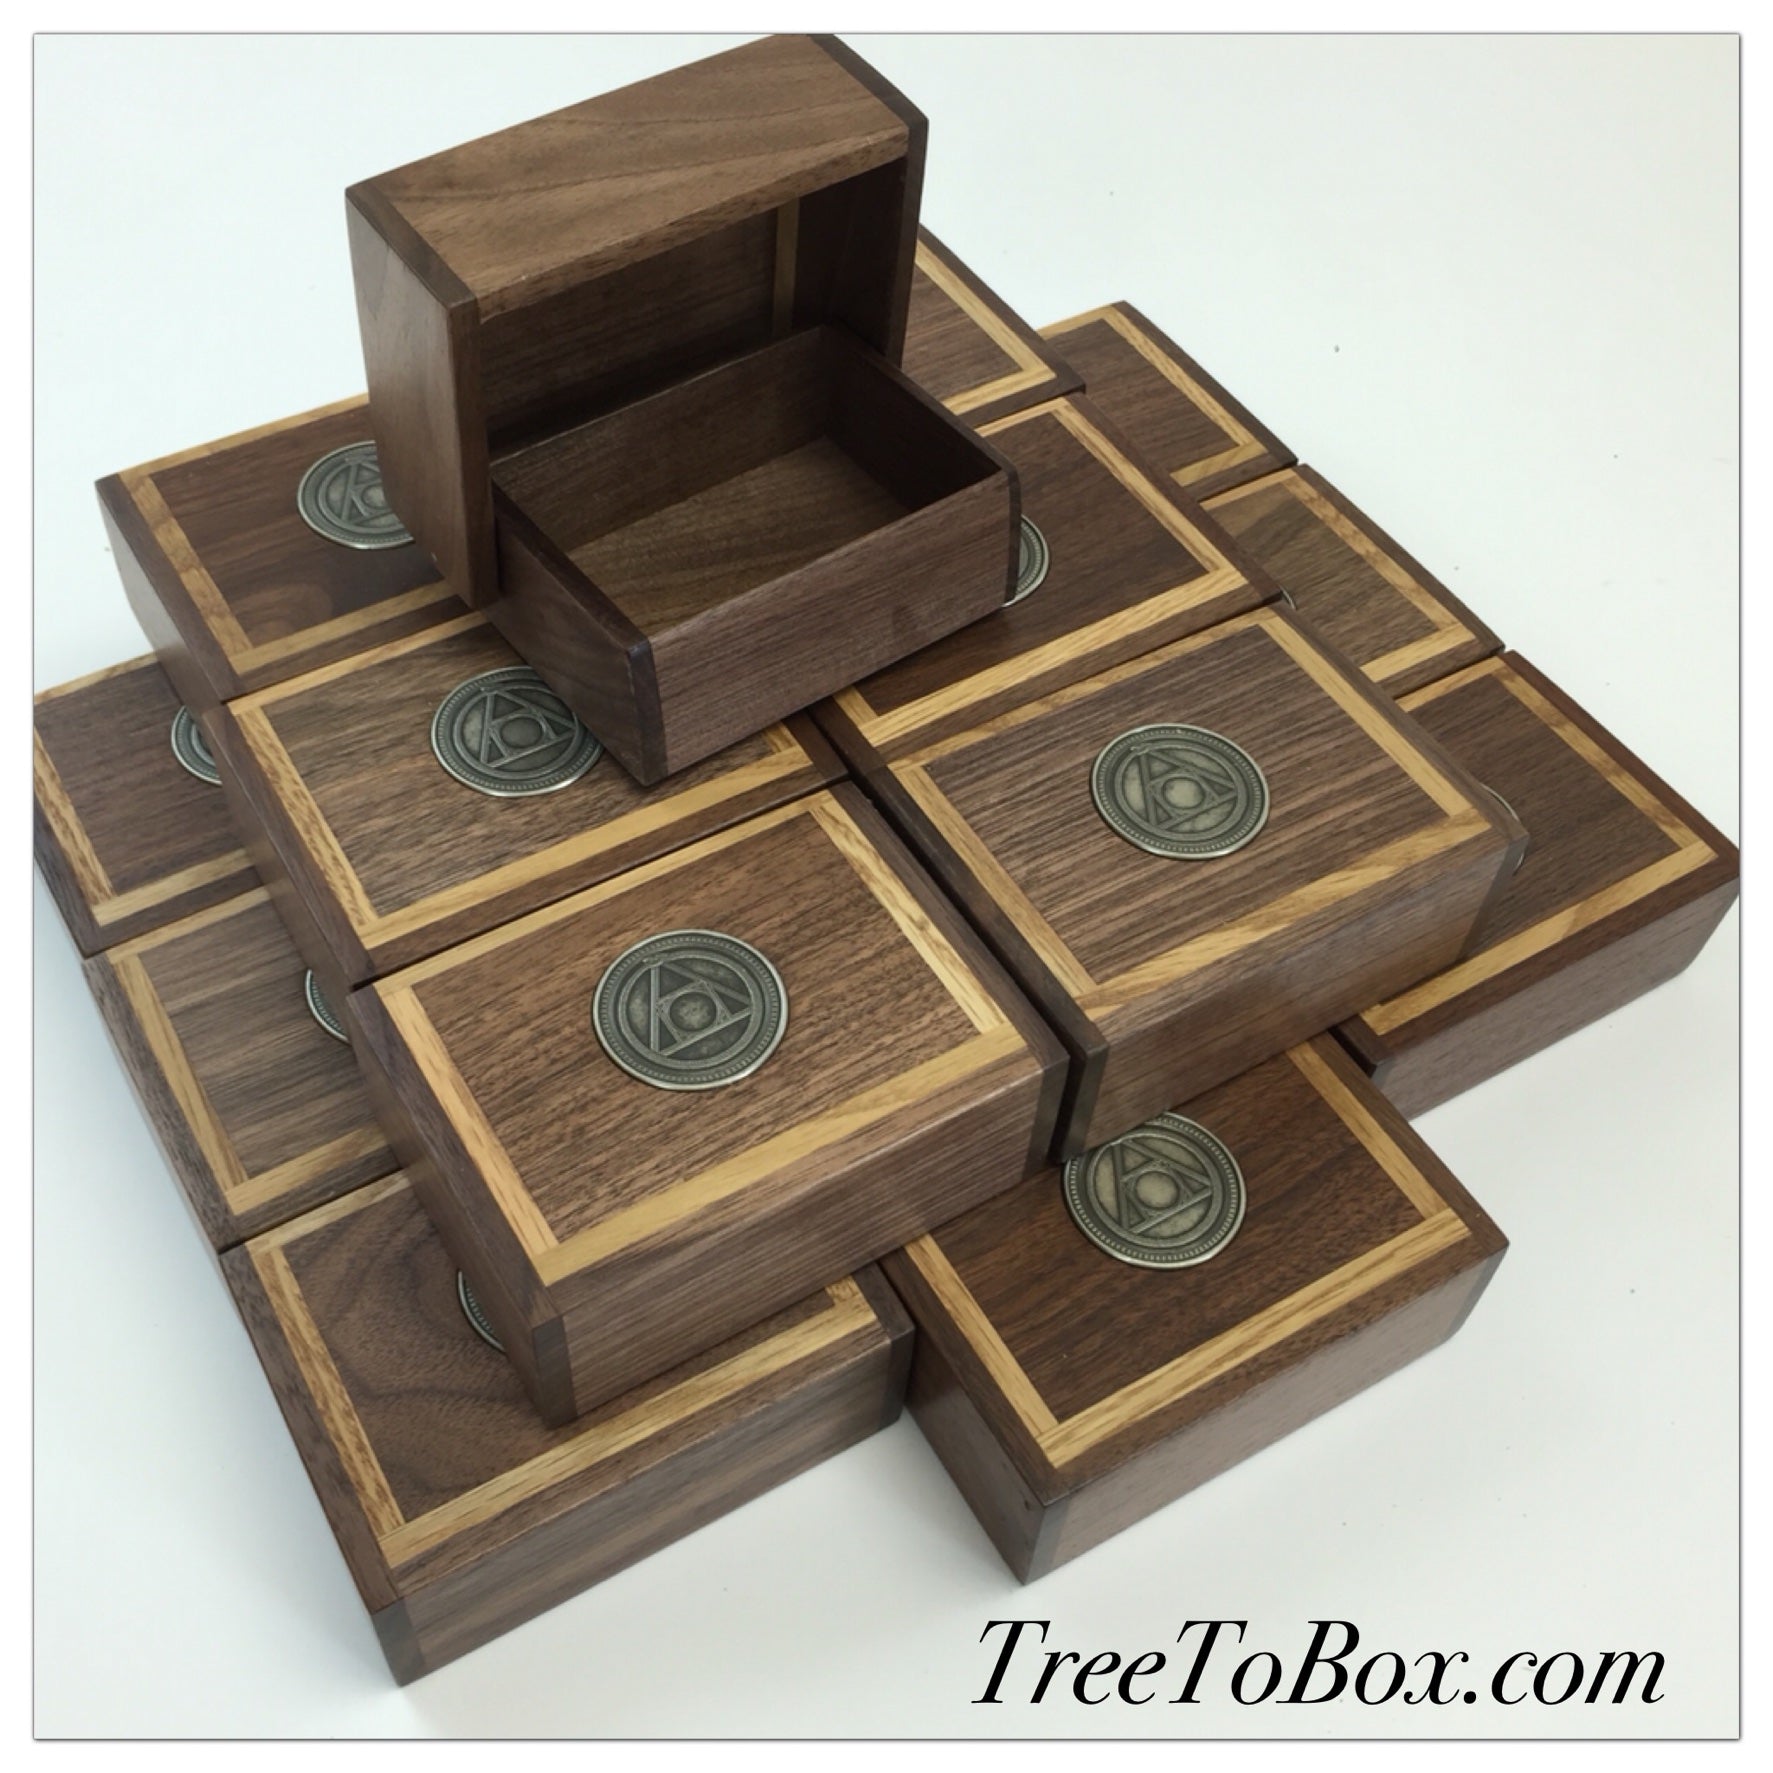 Playing card boxes (Base price shown) - TreeToBox